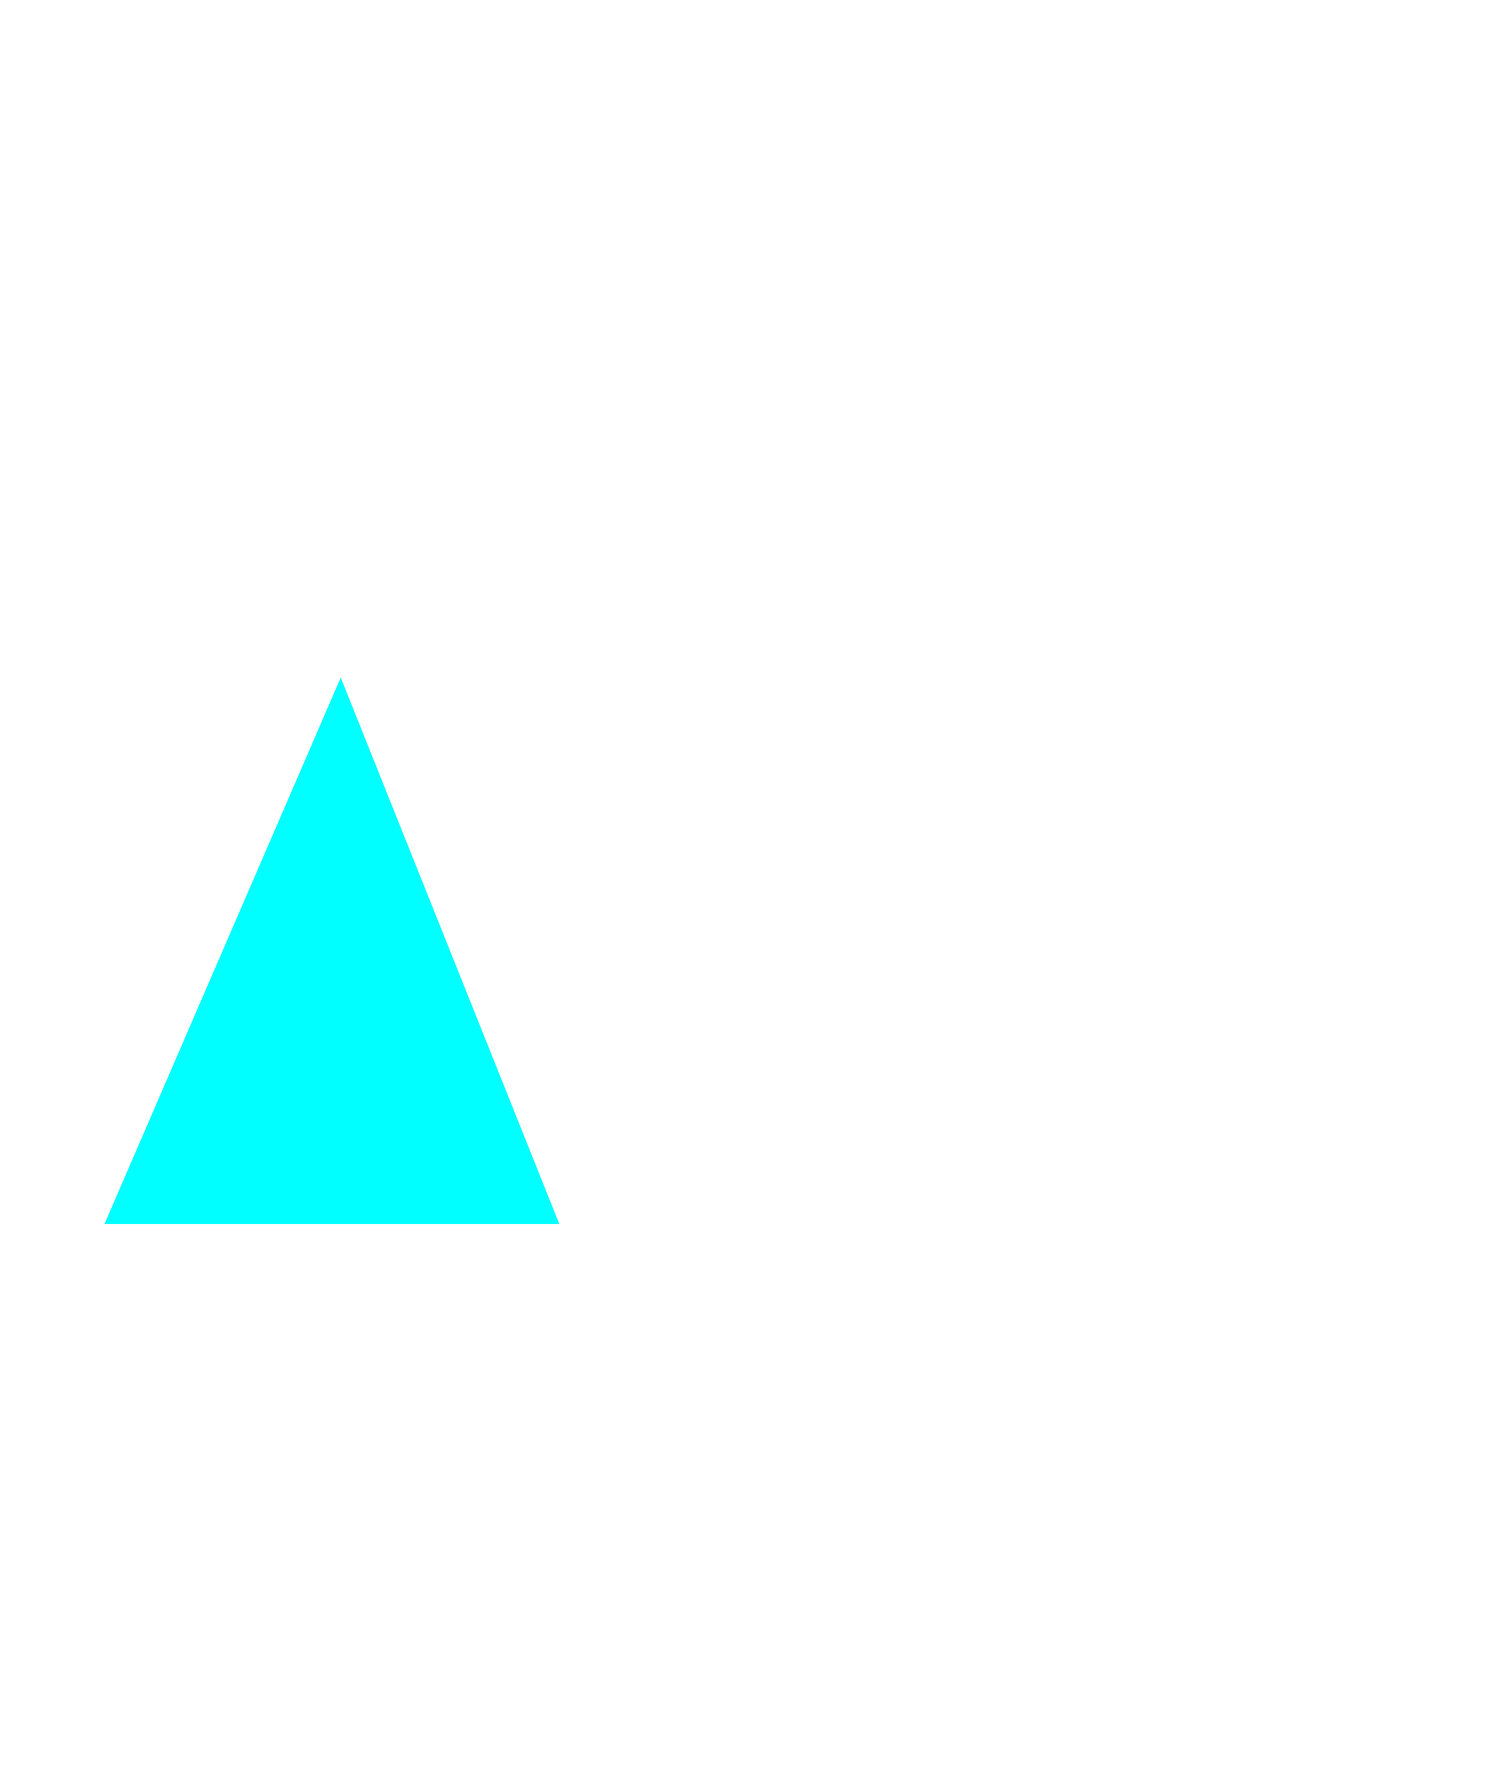 Alpha Home Buyers 